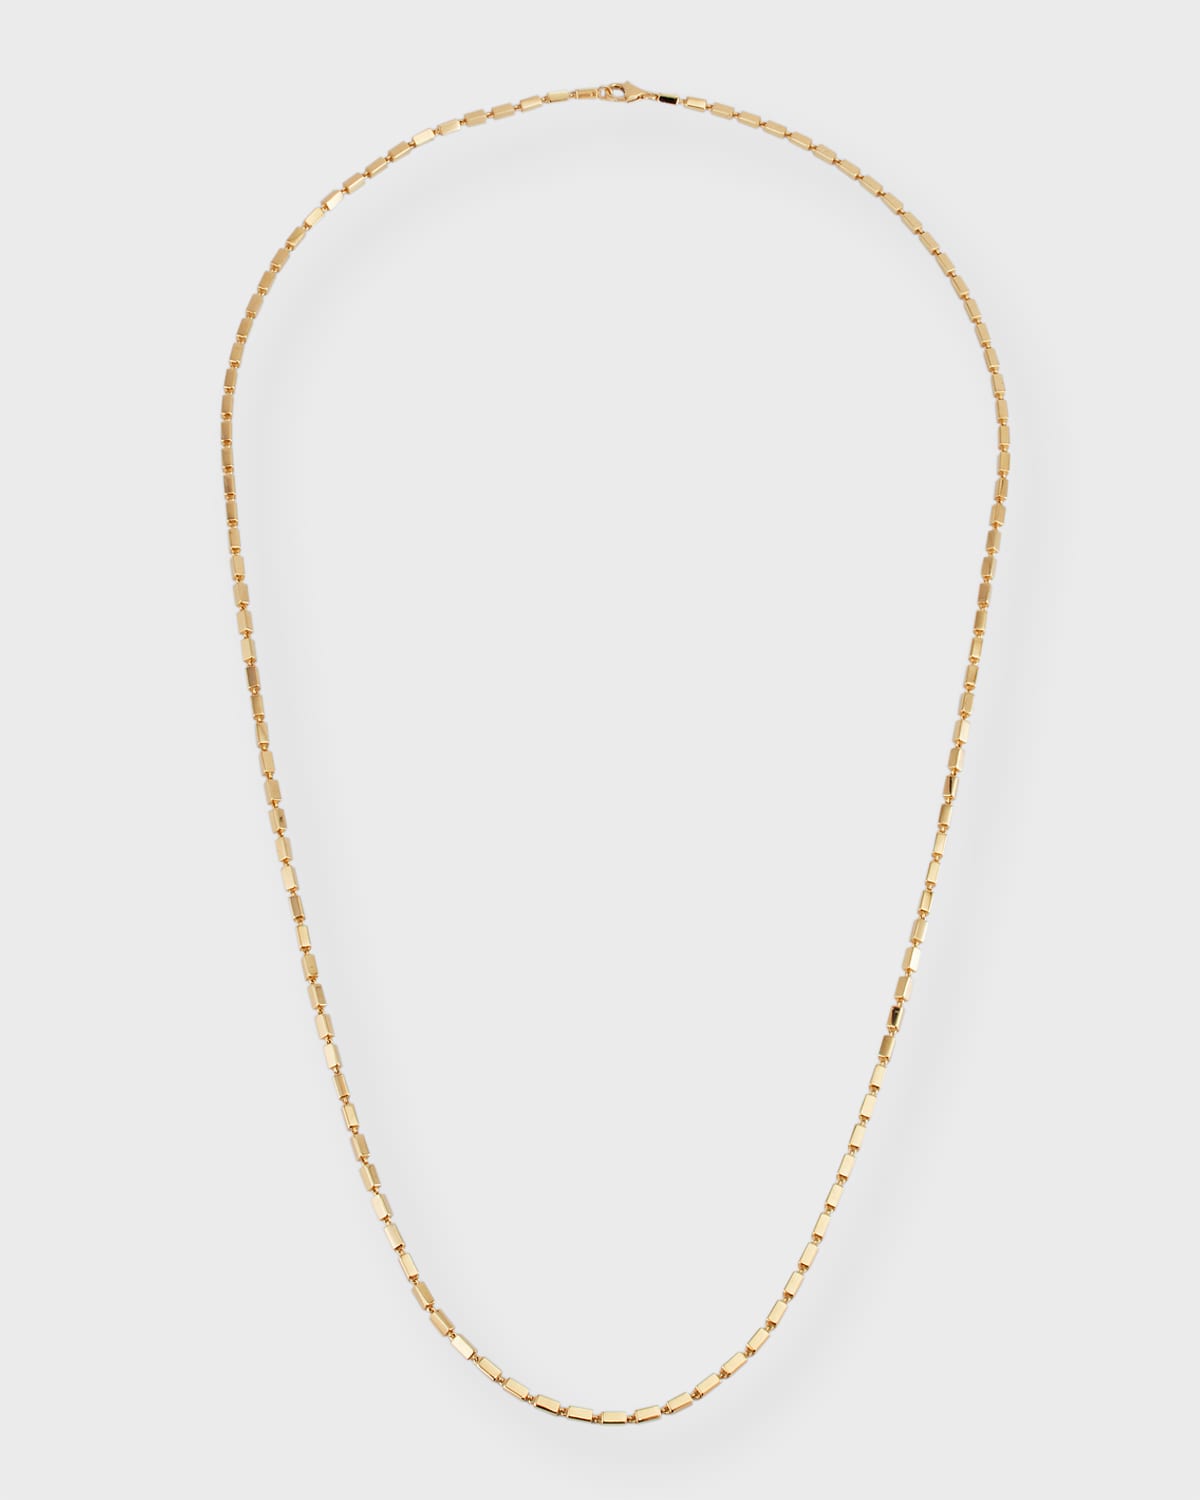 Suzanne Kalan 18k Yellow Gold Long Baguette Link Necklace